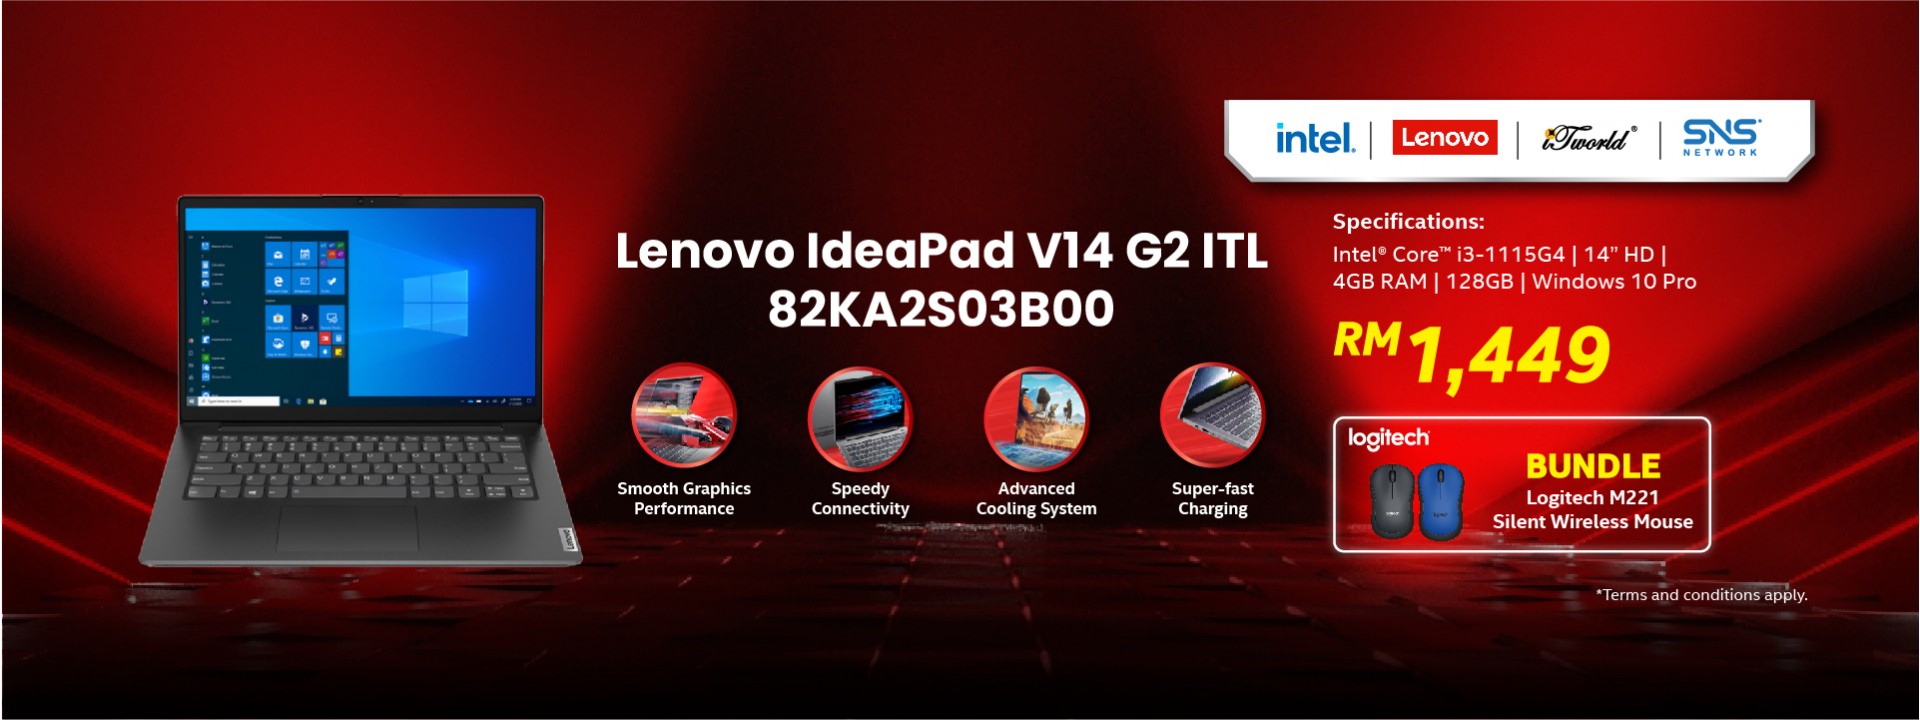 Lenovo-V14-G2-ITL-INTE-i3-1115G4-4GB-128GB-SSD-Integrated-Graphics-14.0-HD-W10P-for-Edu